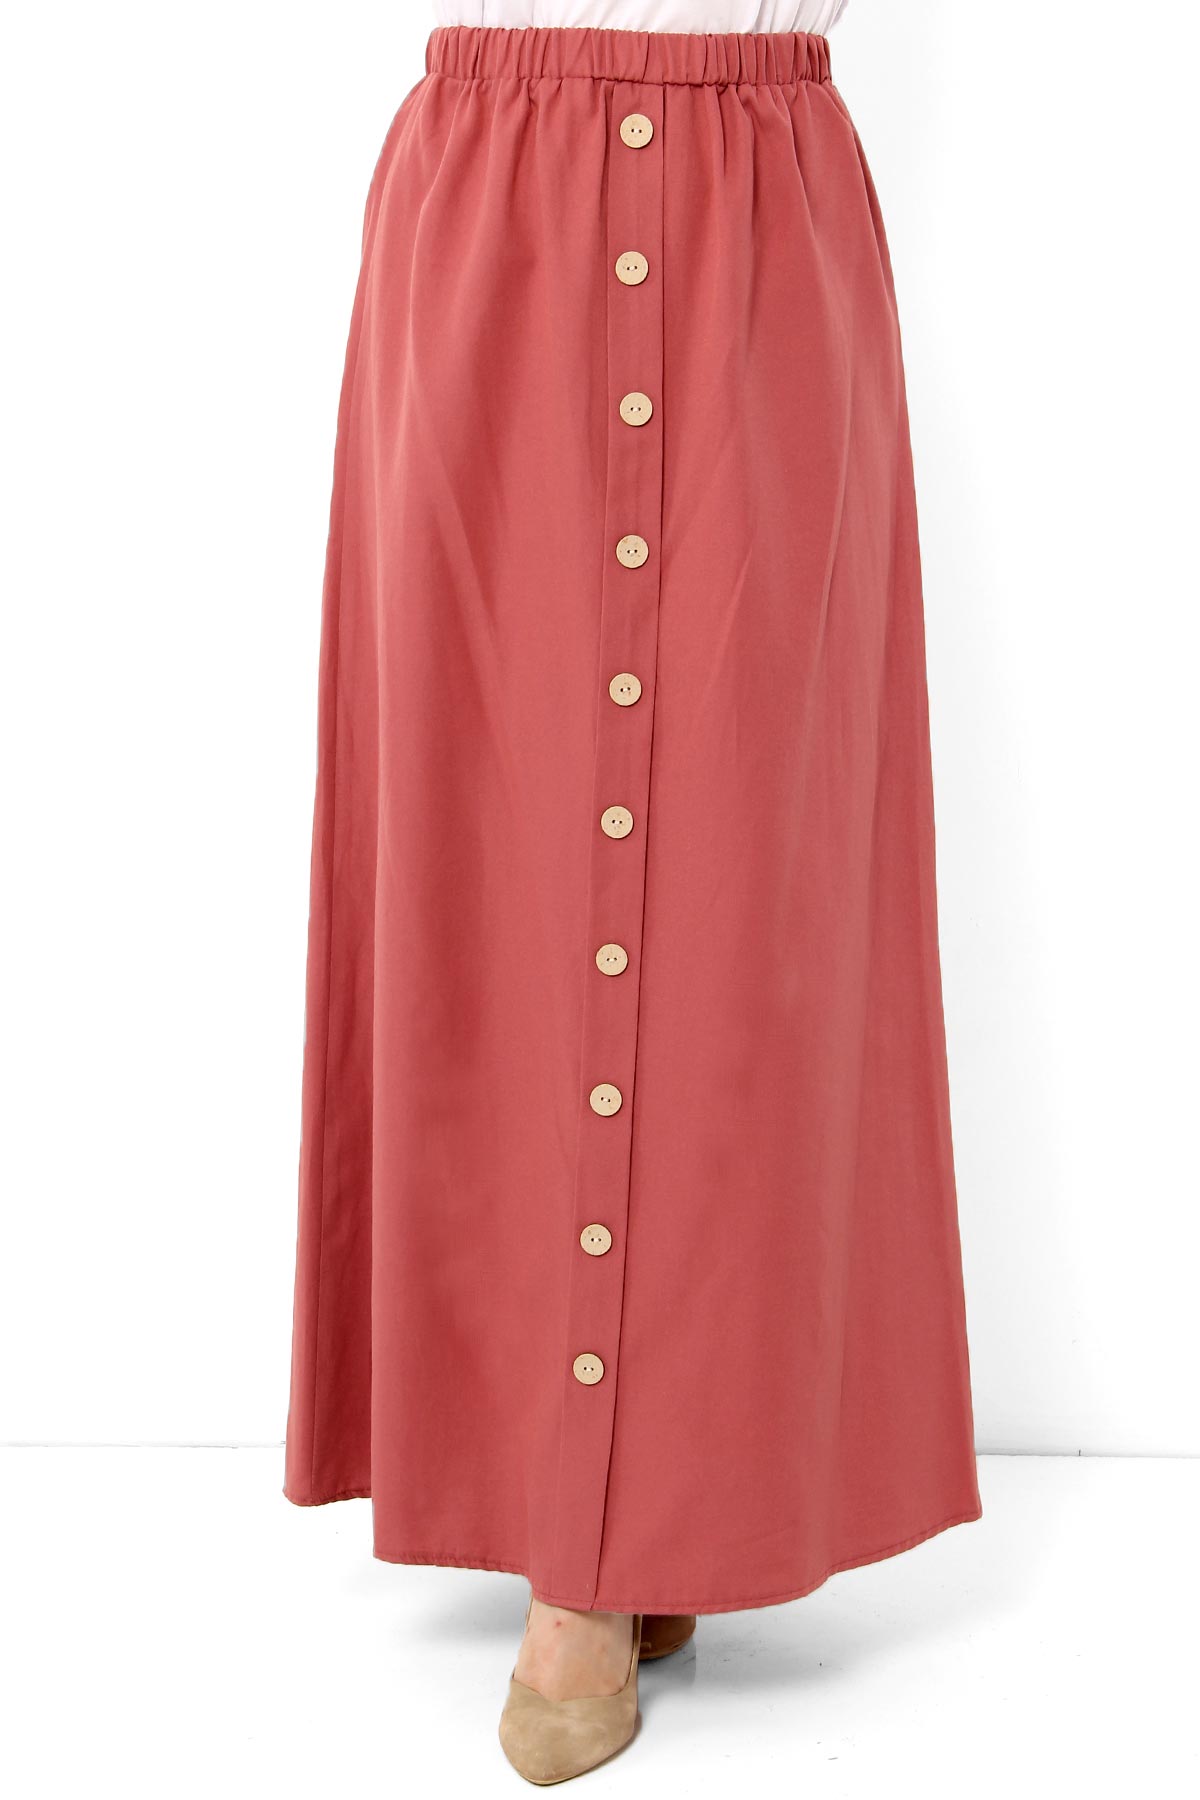 Tesettür Dünyası - Ornamental Buttoned Hijab Skirt TSD0124 Coral